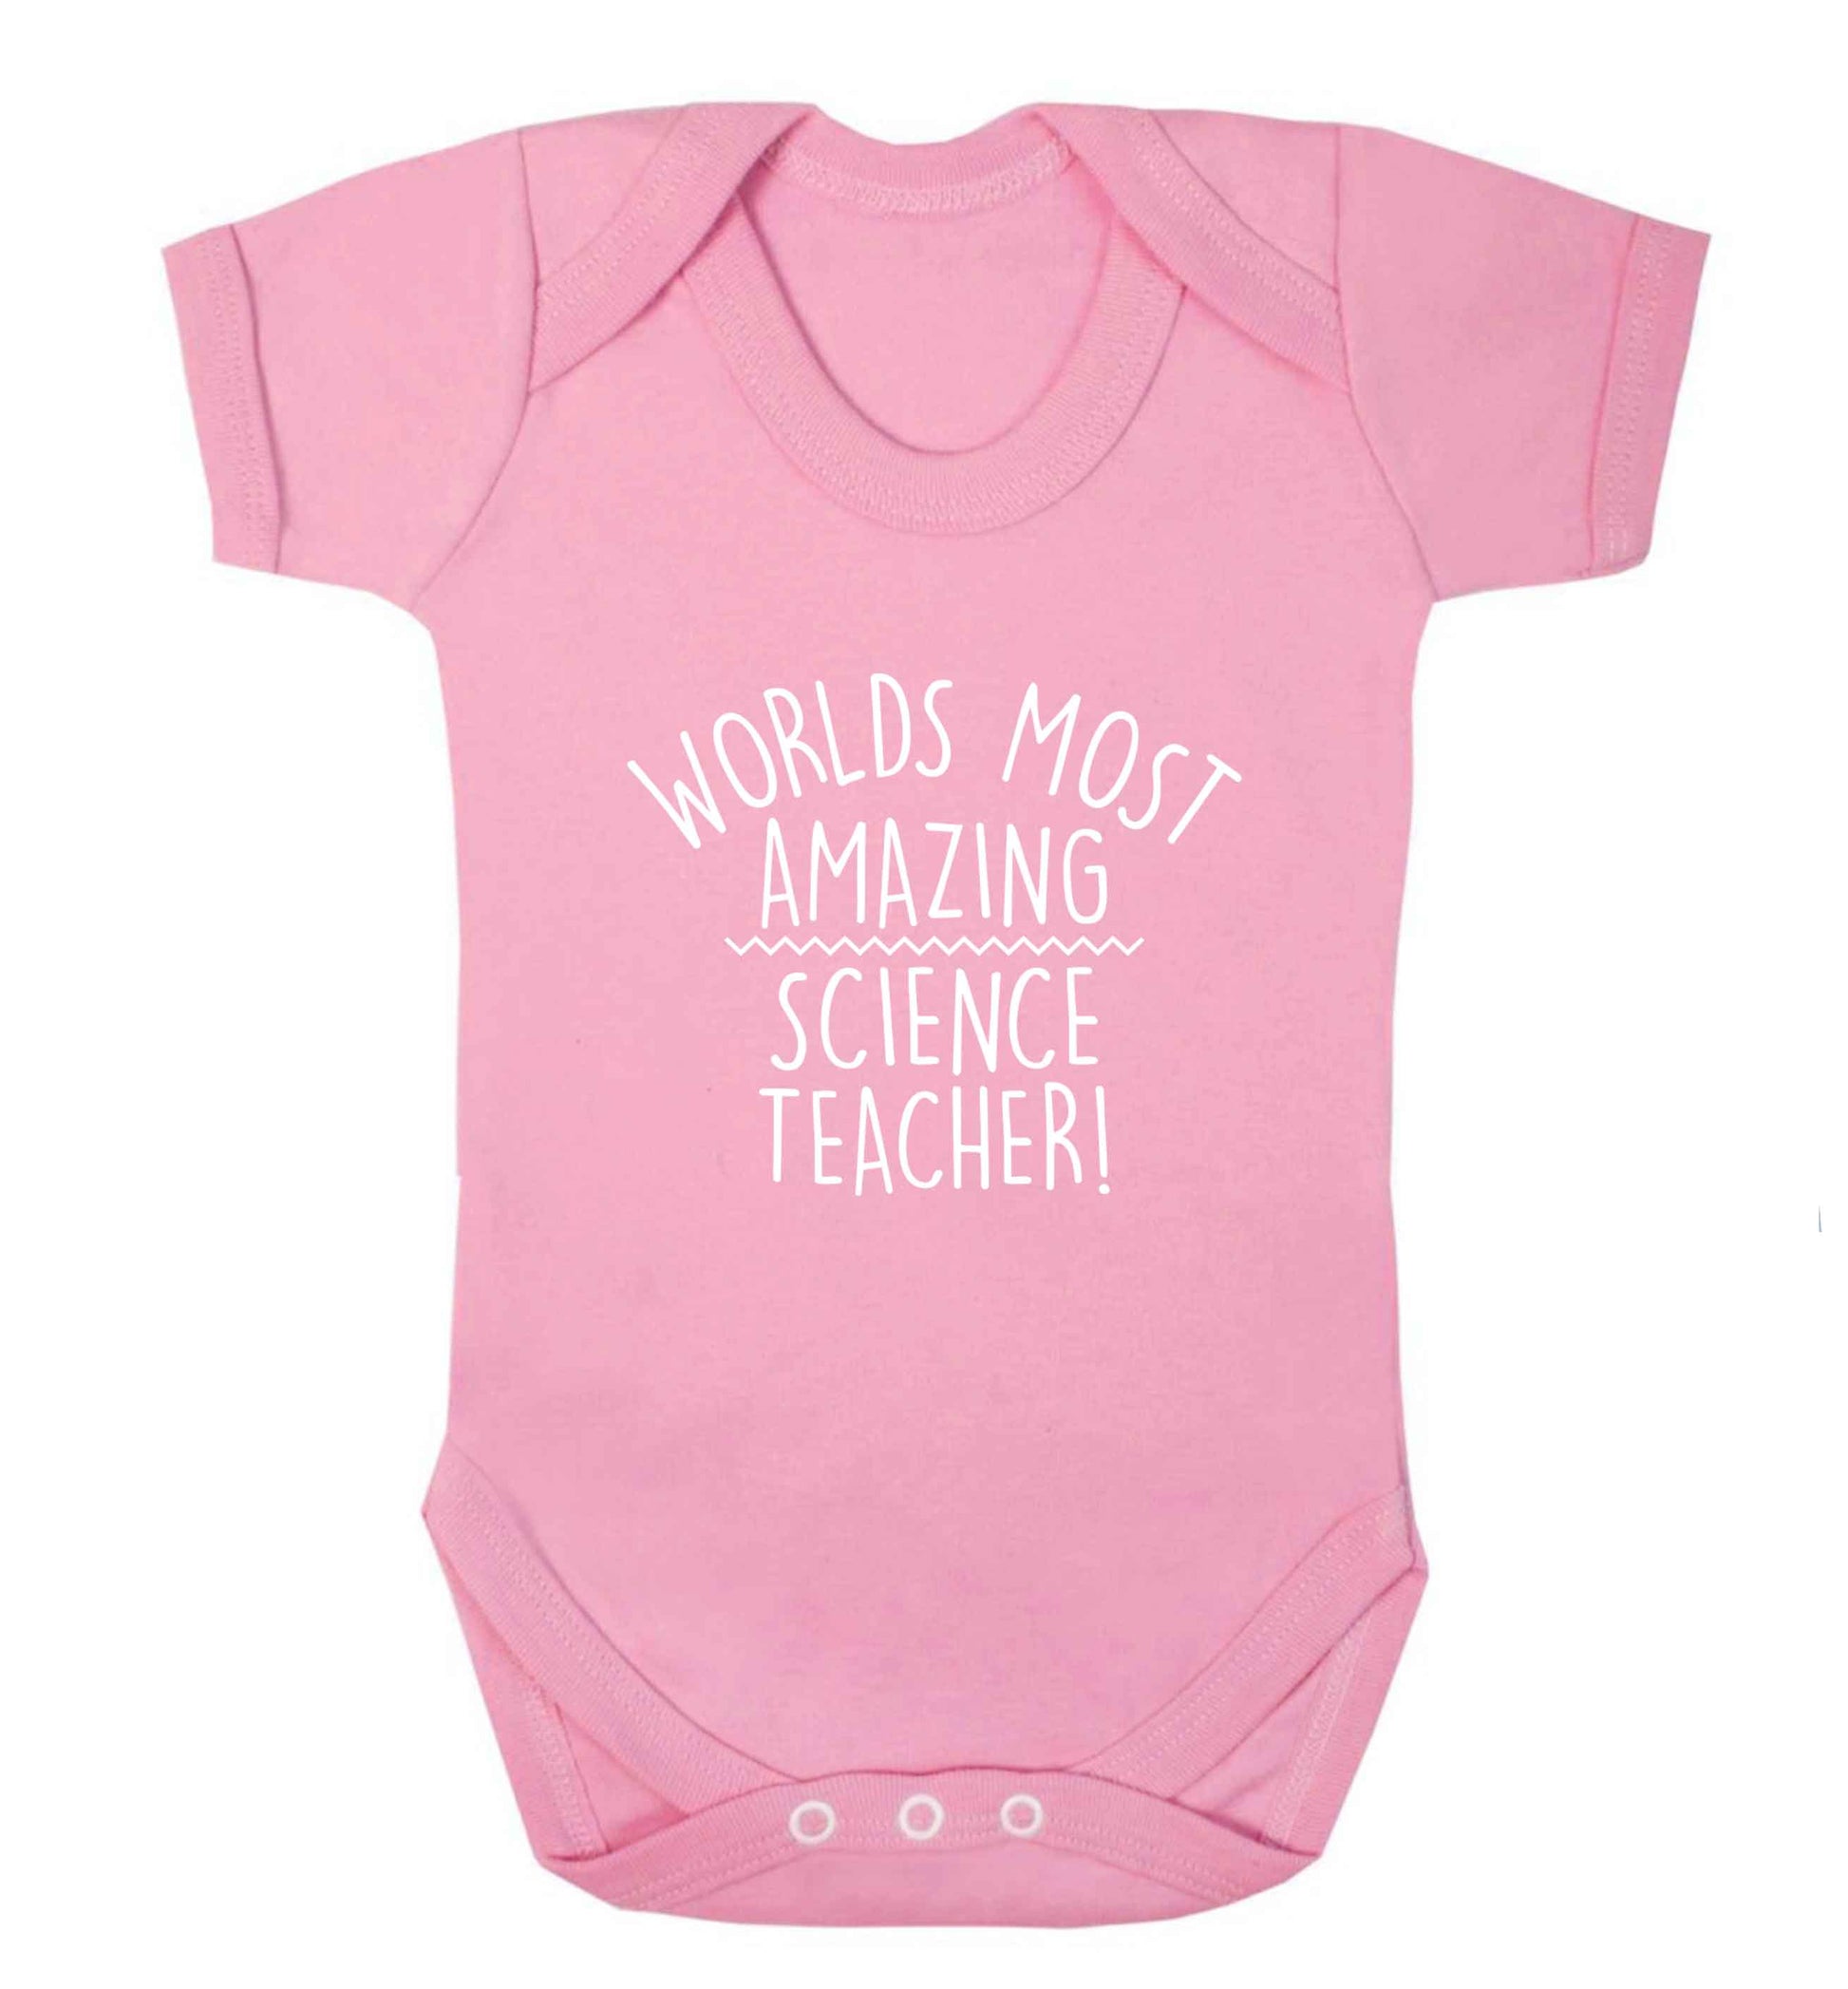 Worlds most amazing science teacher baby vest pale pink 18-24 months